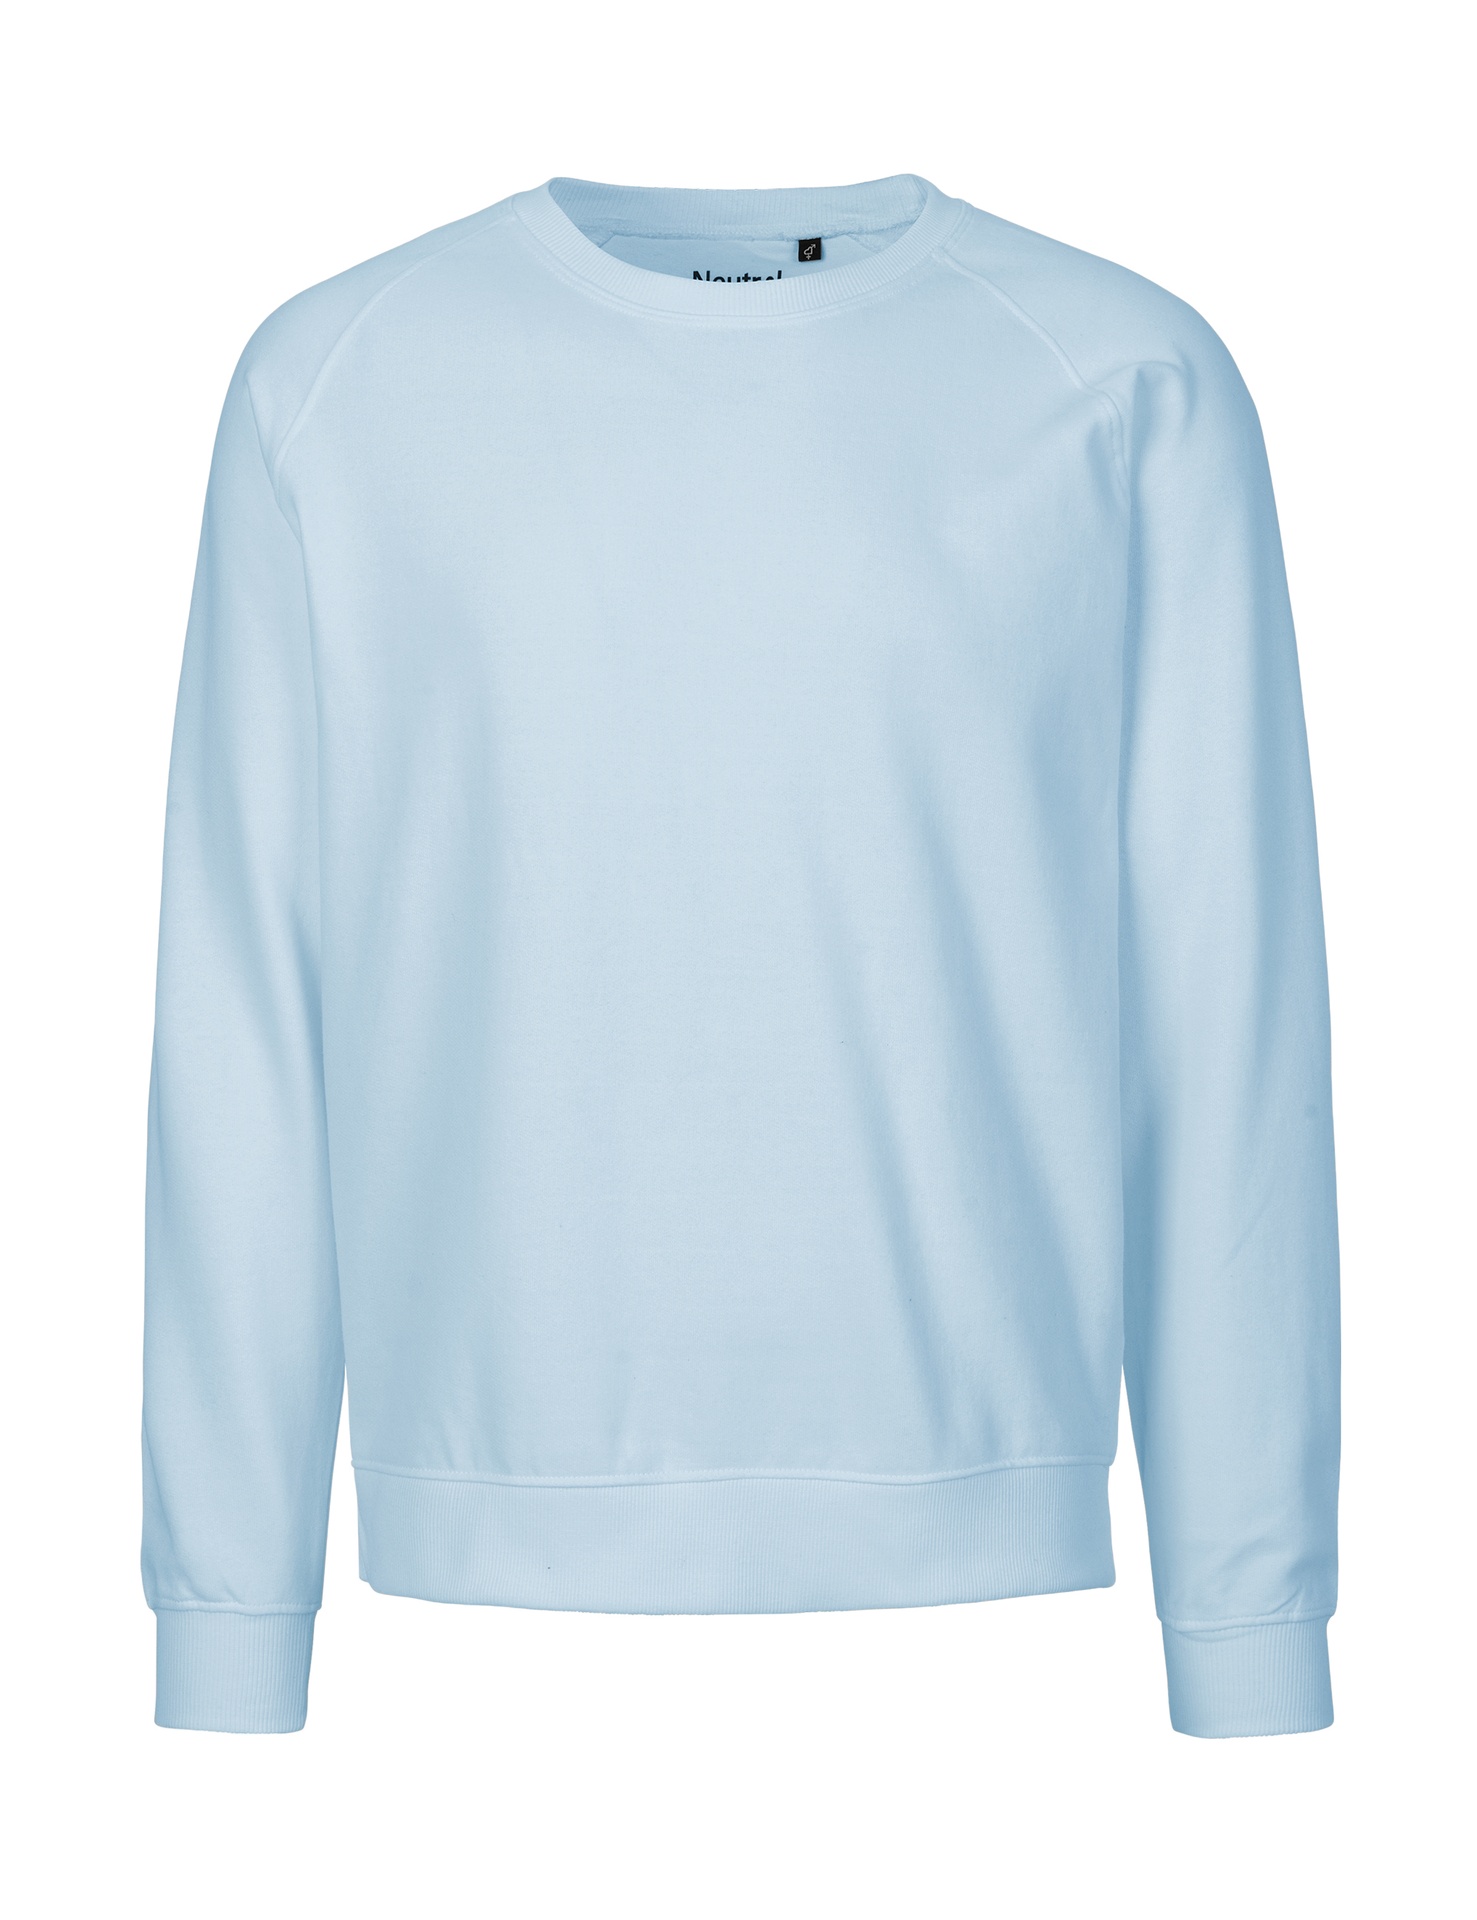 [PR/02887] Unisex Sweatshirt (Light Blue 69, S)